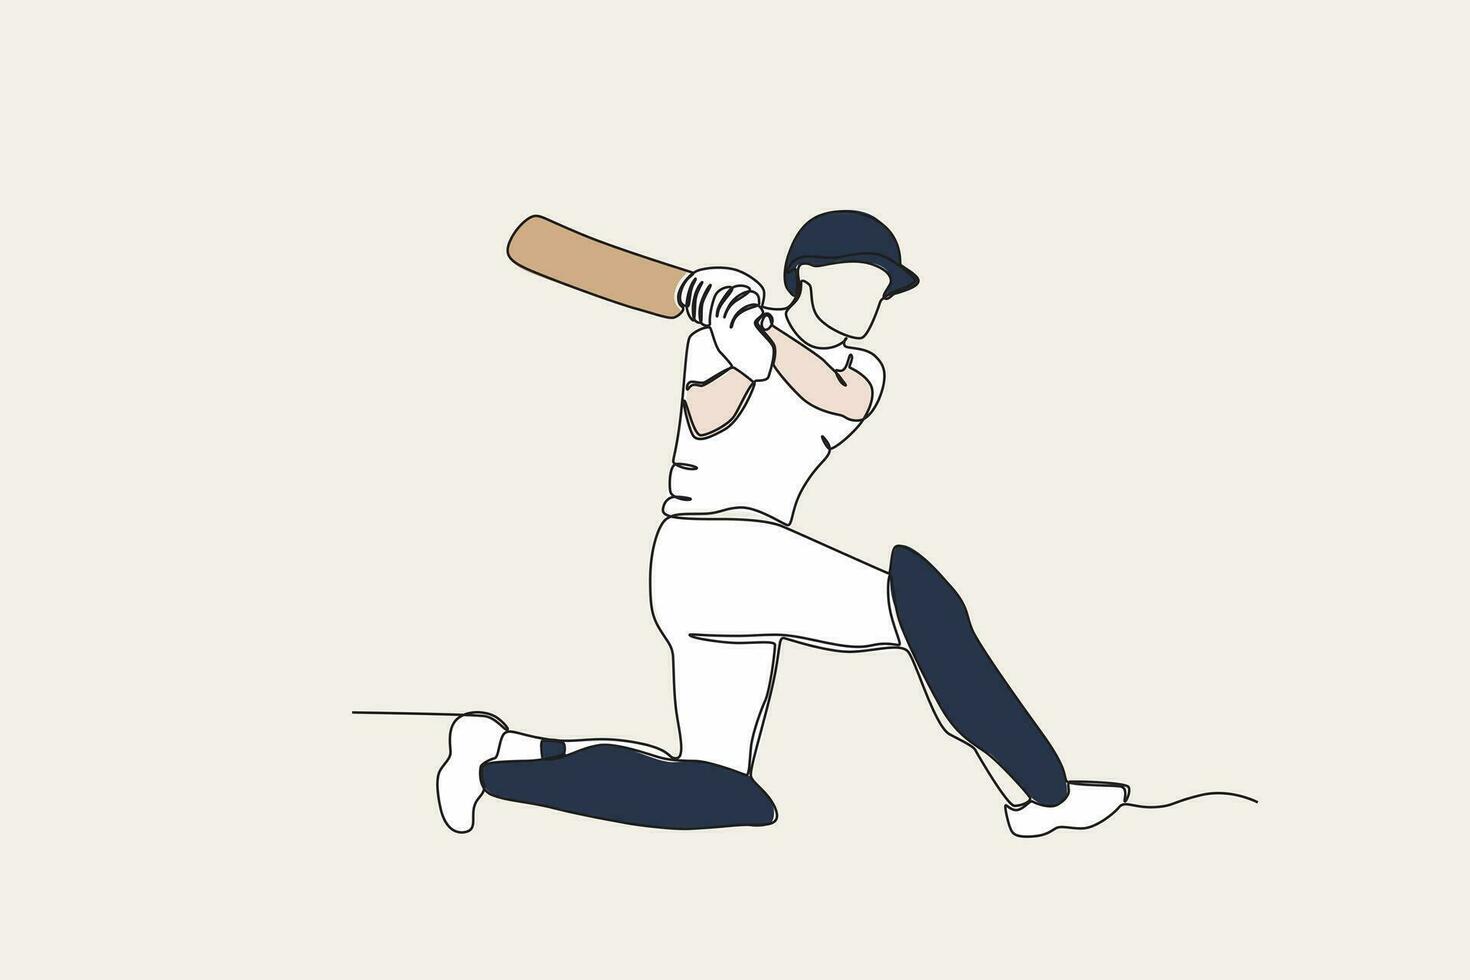 color ilustración de un bateador golpear un pelota vector